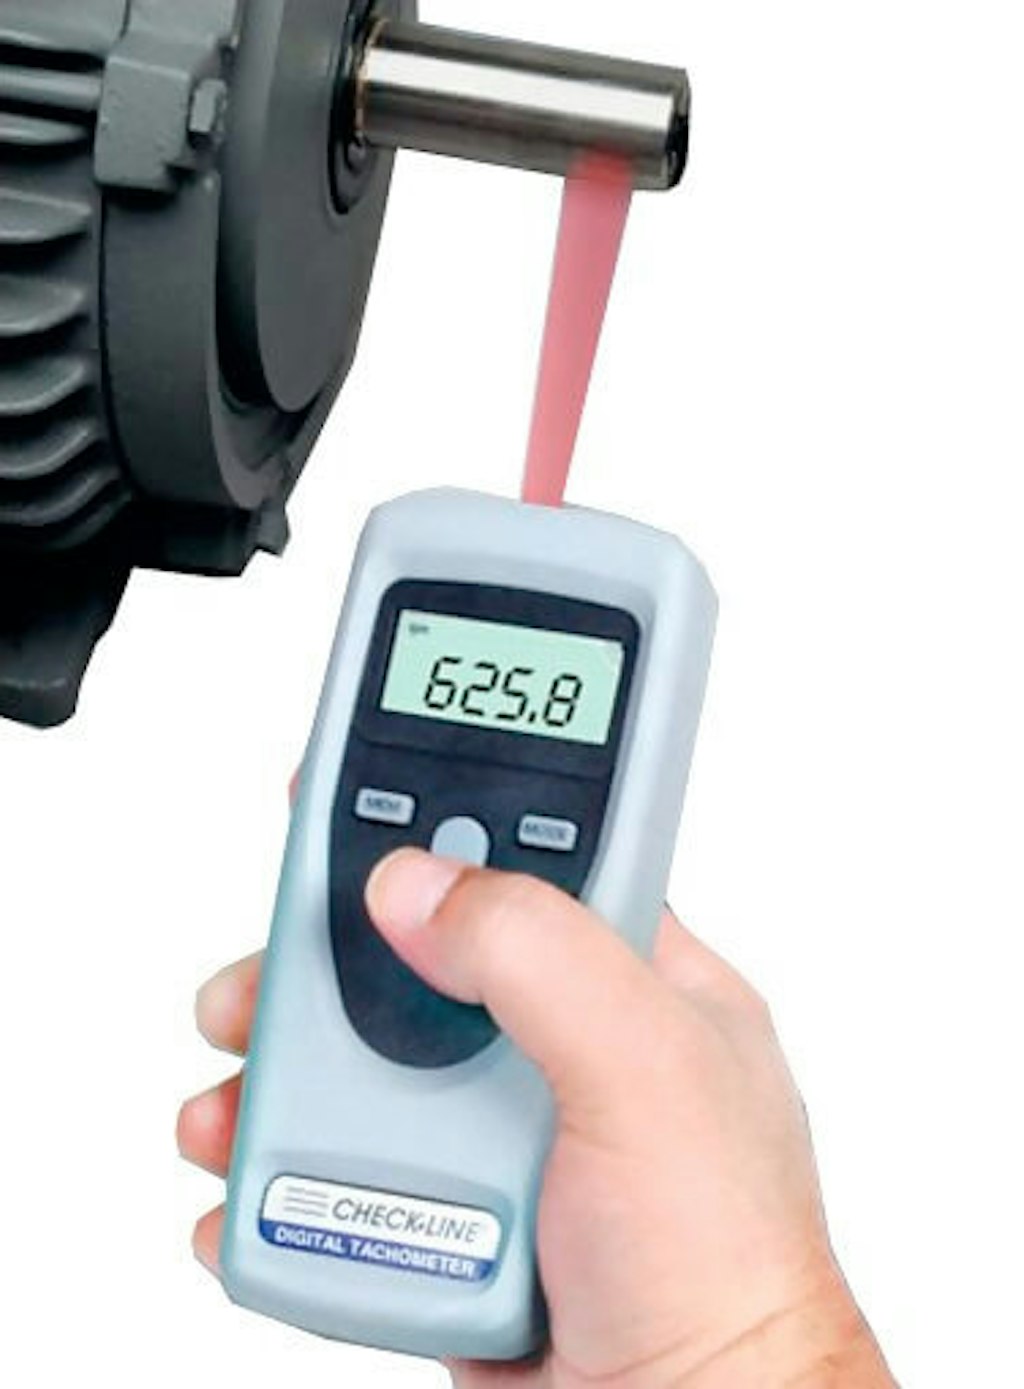 Typical handheld tachometer